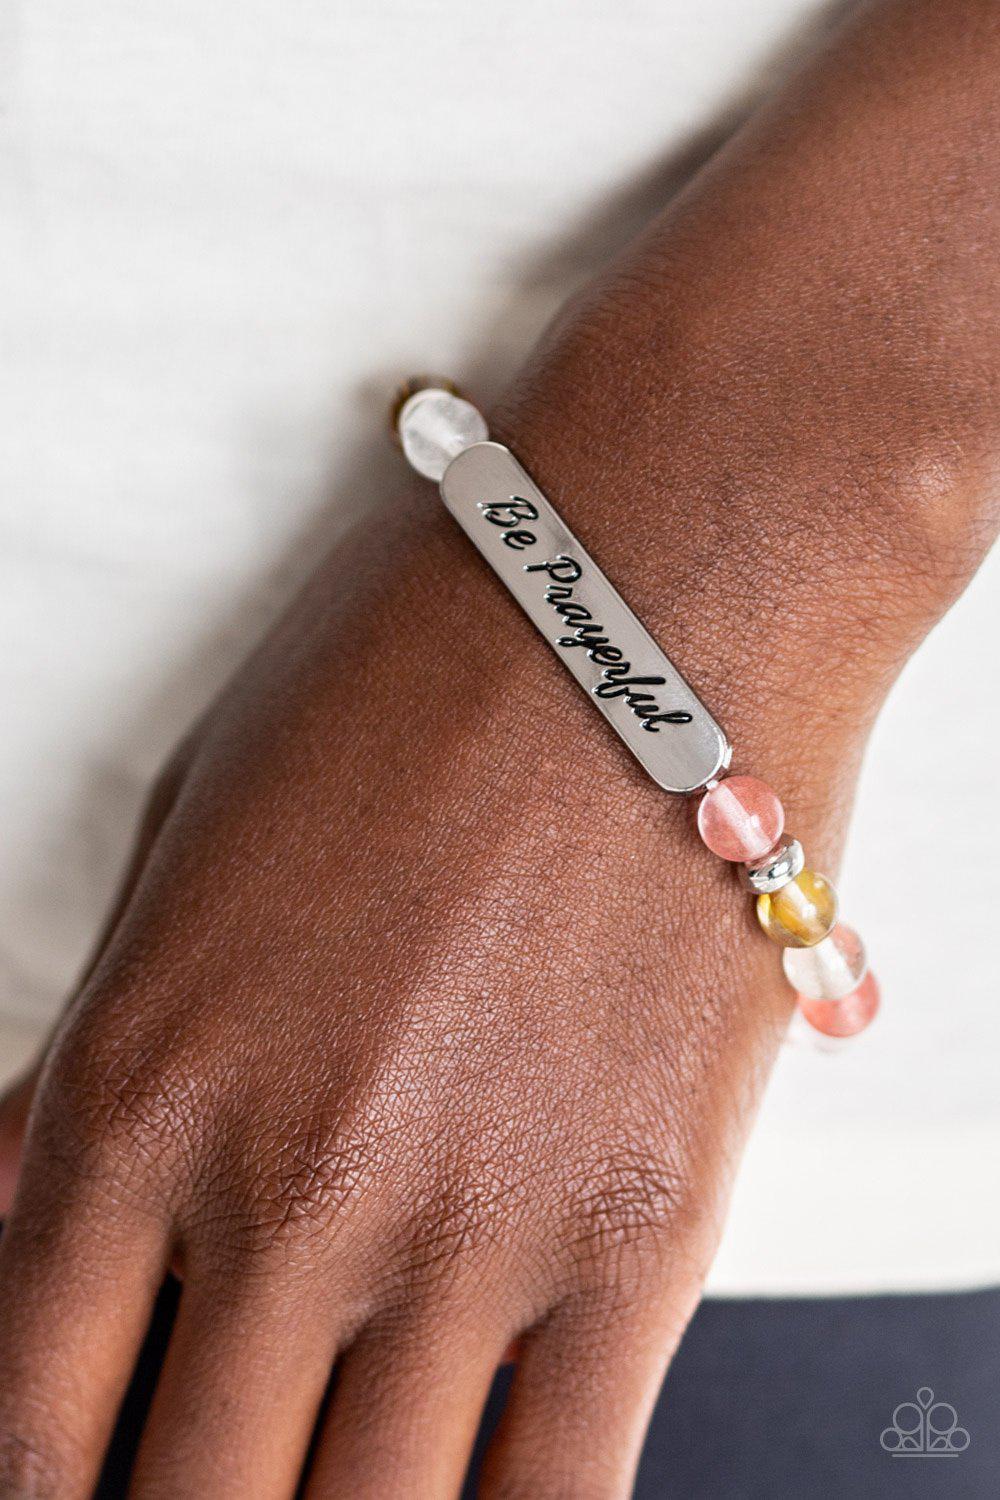 Be Prayerful Multi-color Stone Stretch Bracelet - Paparazzi Accessories-CarasShop.com - $5 Jewelry by Cara Jewels